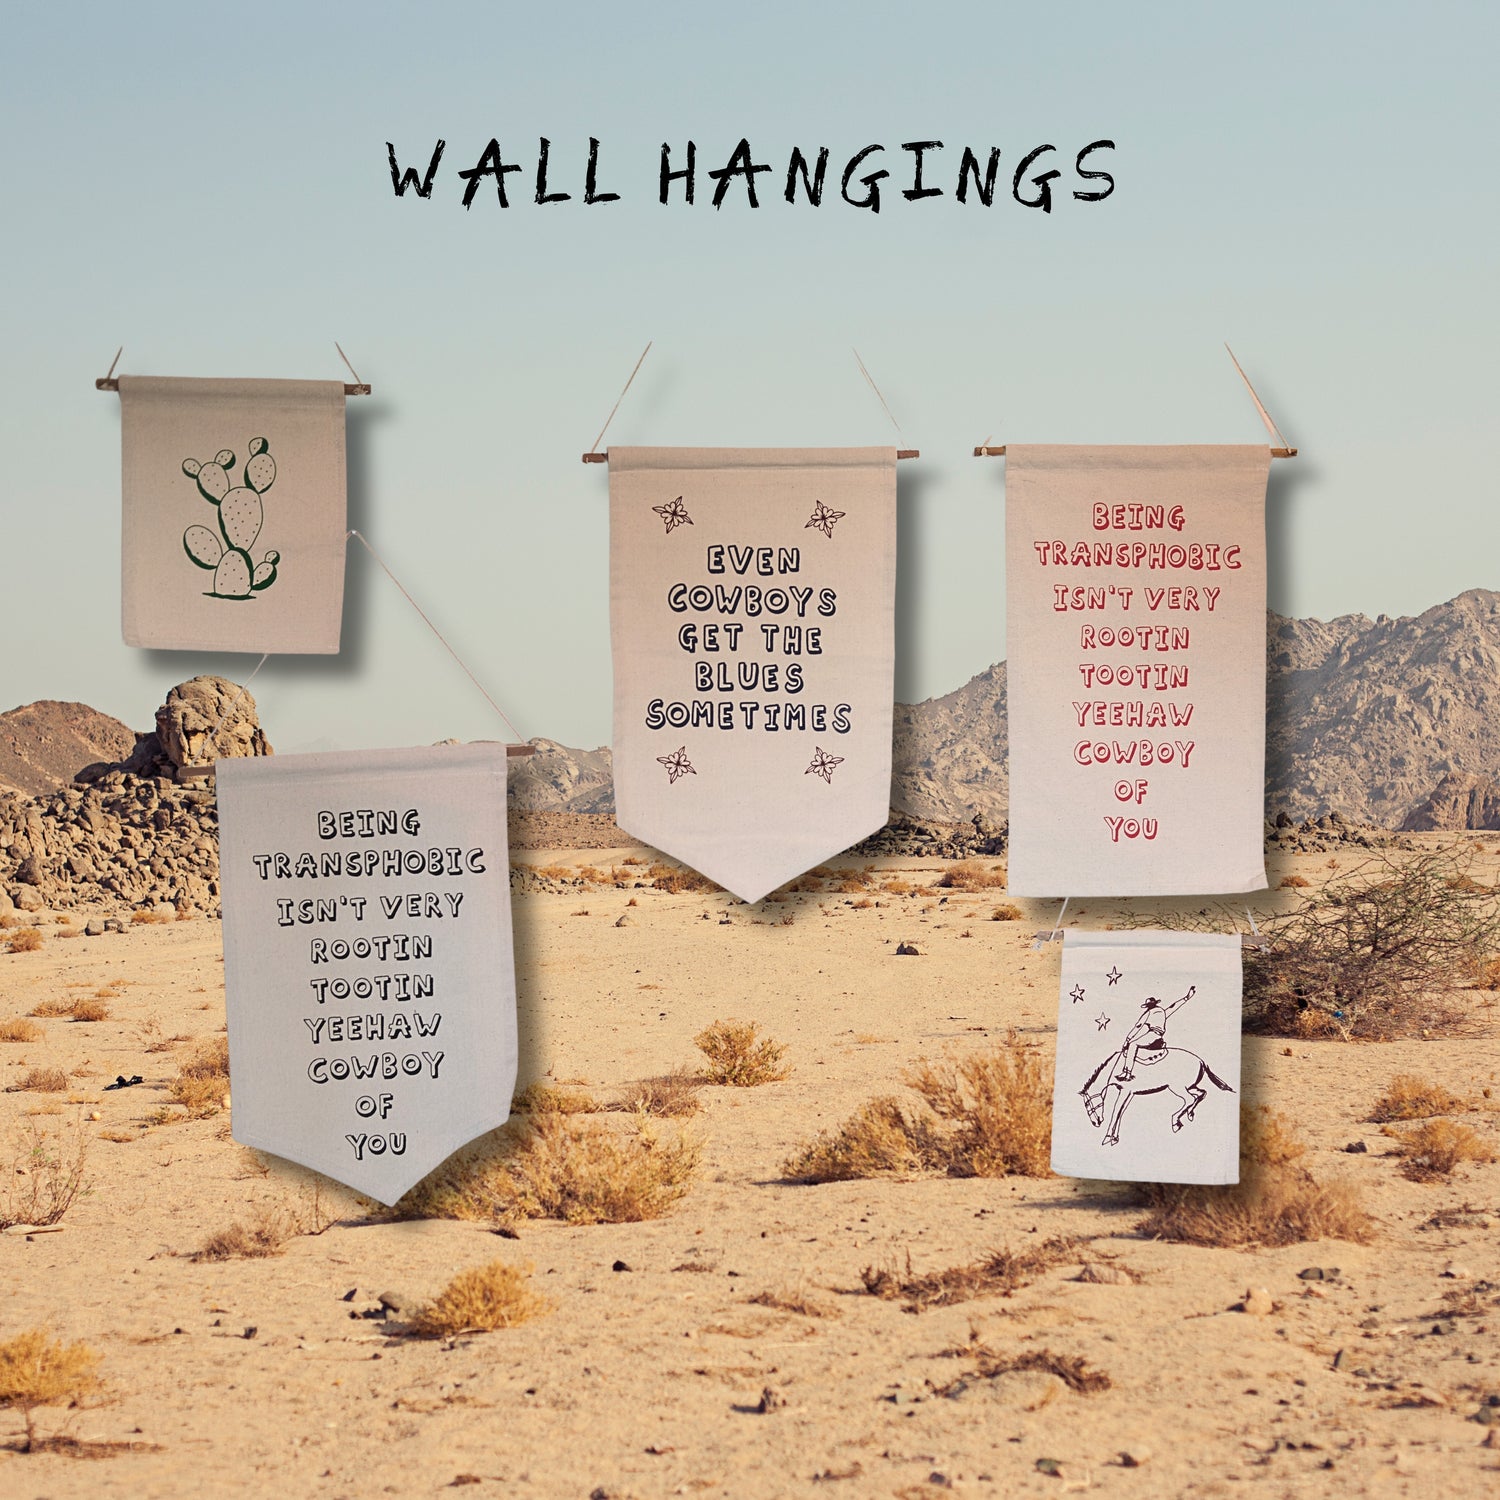 Wall Hangings